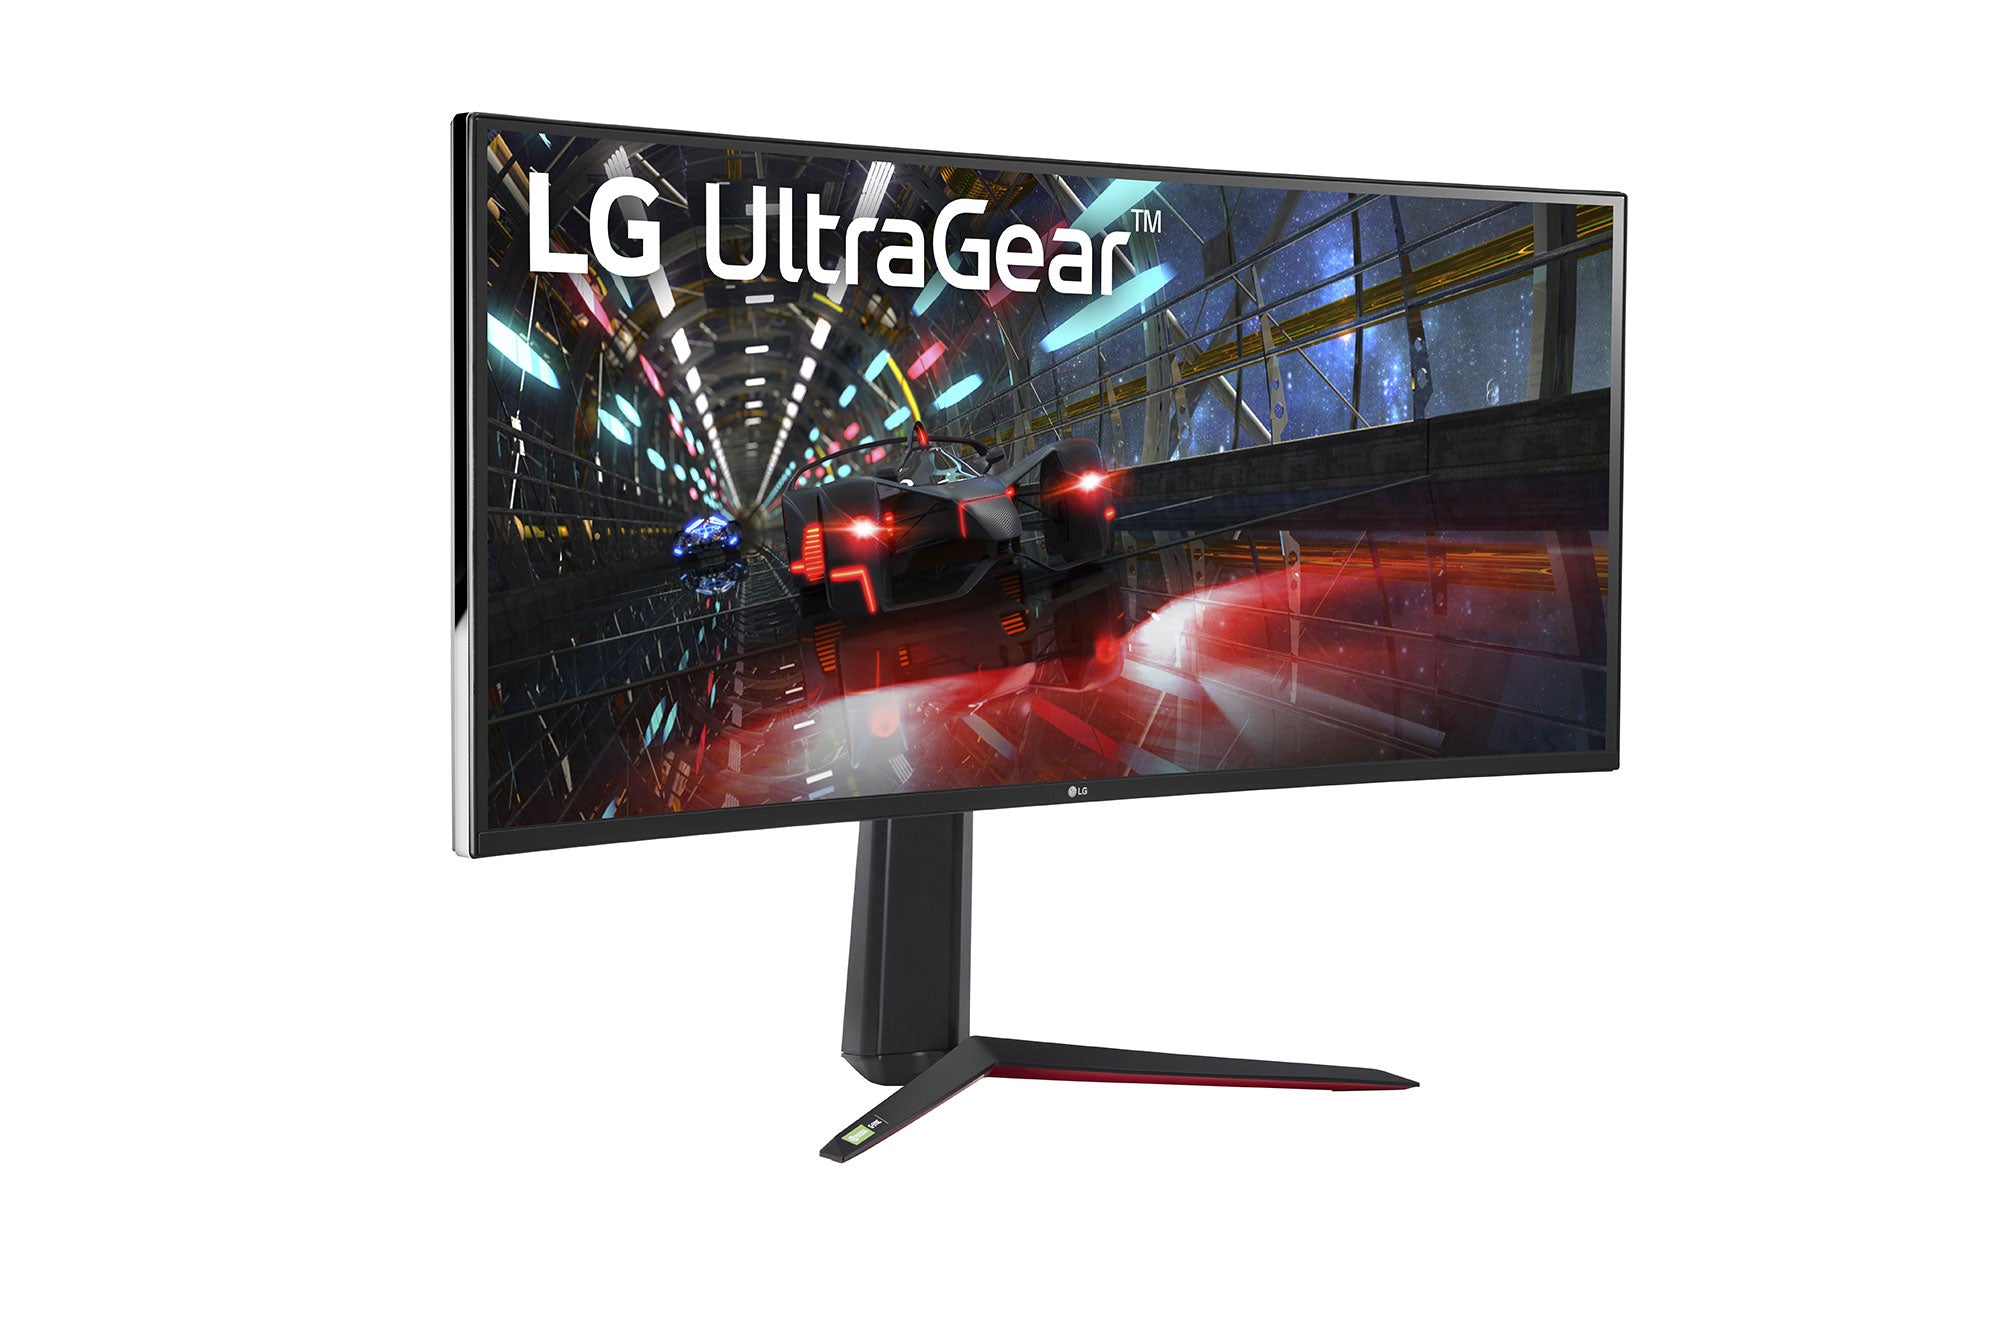 LG 38GN950 UltraGear Monitor / 38 inch / 3840 x 1600 Resolution / AMD FreeSync Premium Pro / Dynamic Action Sync / Black Stabilizer / Nano IPS™ Technology